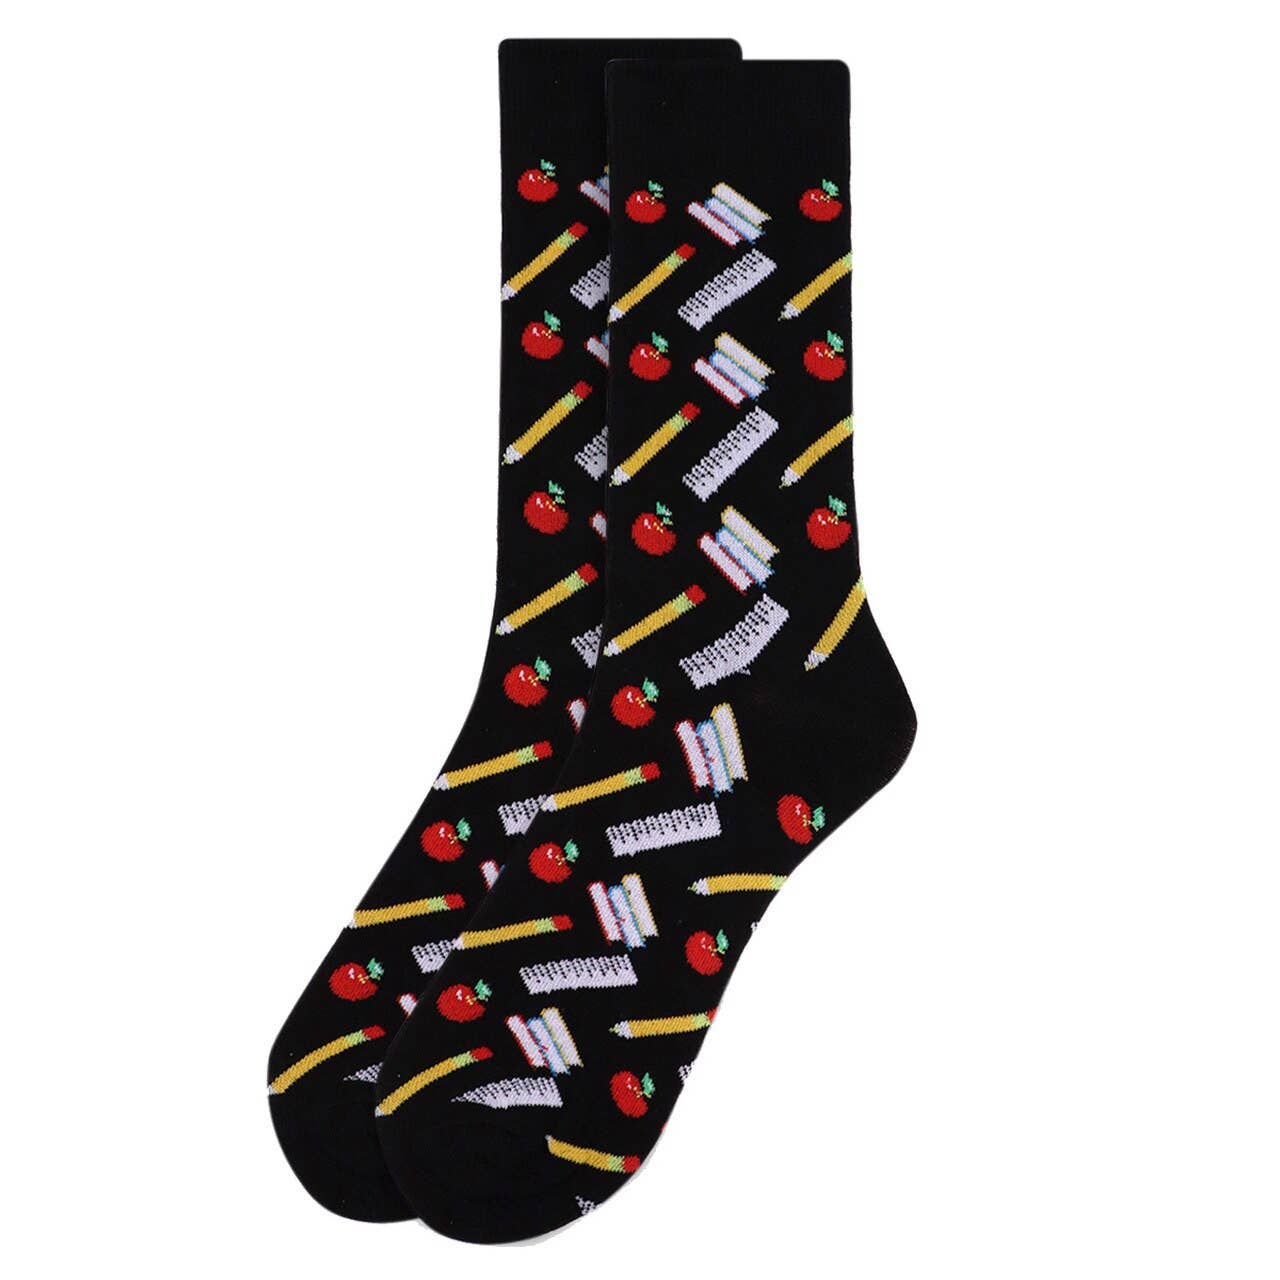 School Supplies Socks for Men